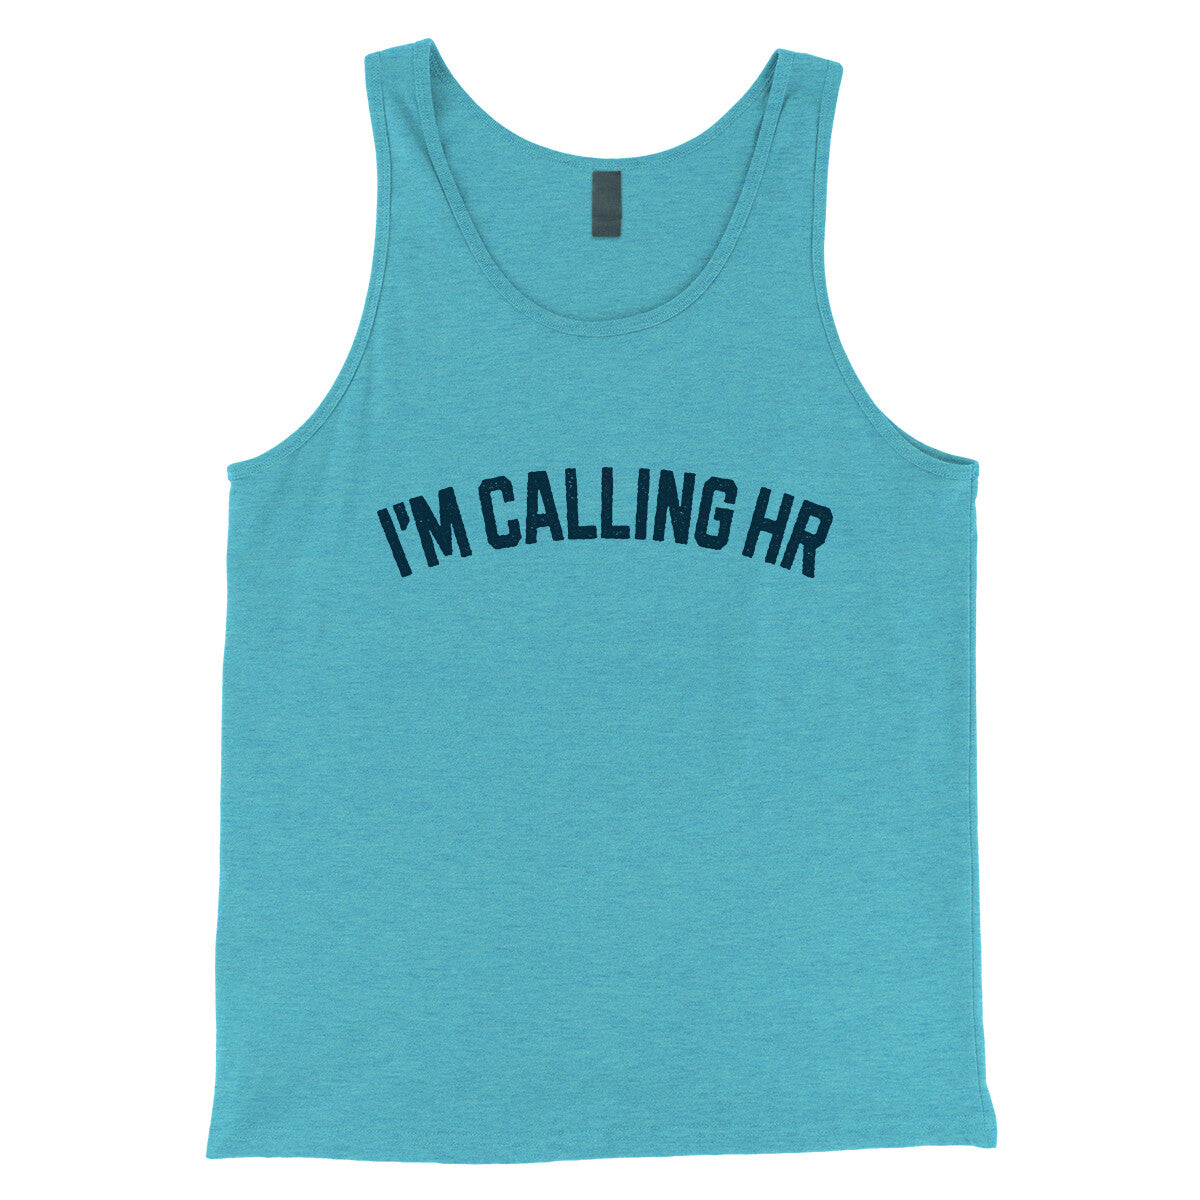 I'm Calling HR in Aqua Triblend Color